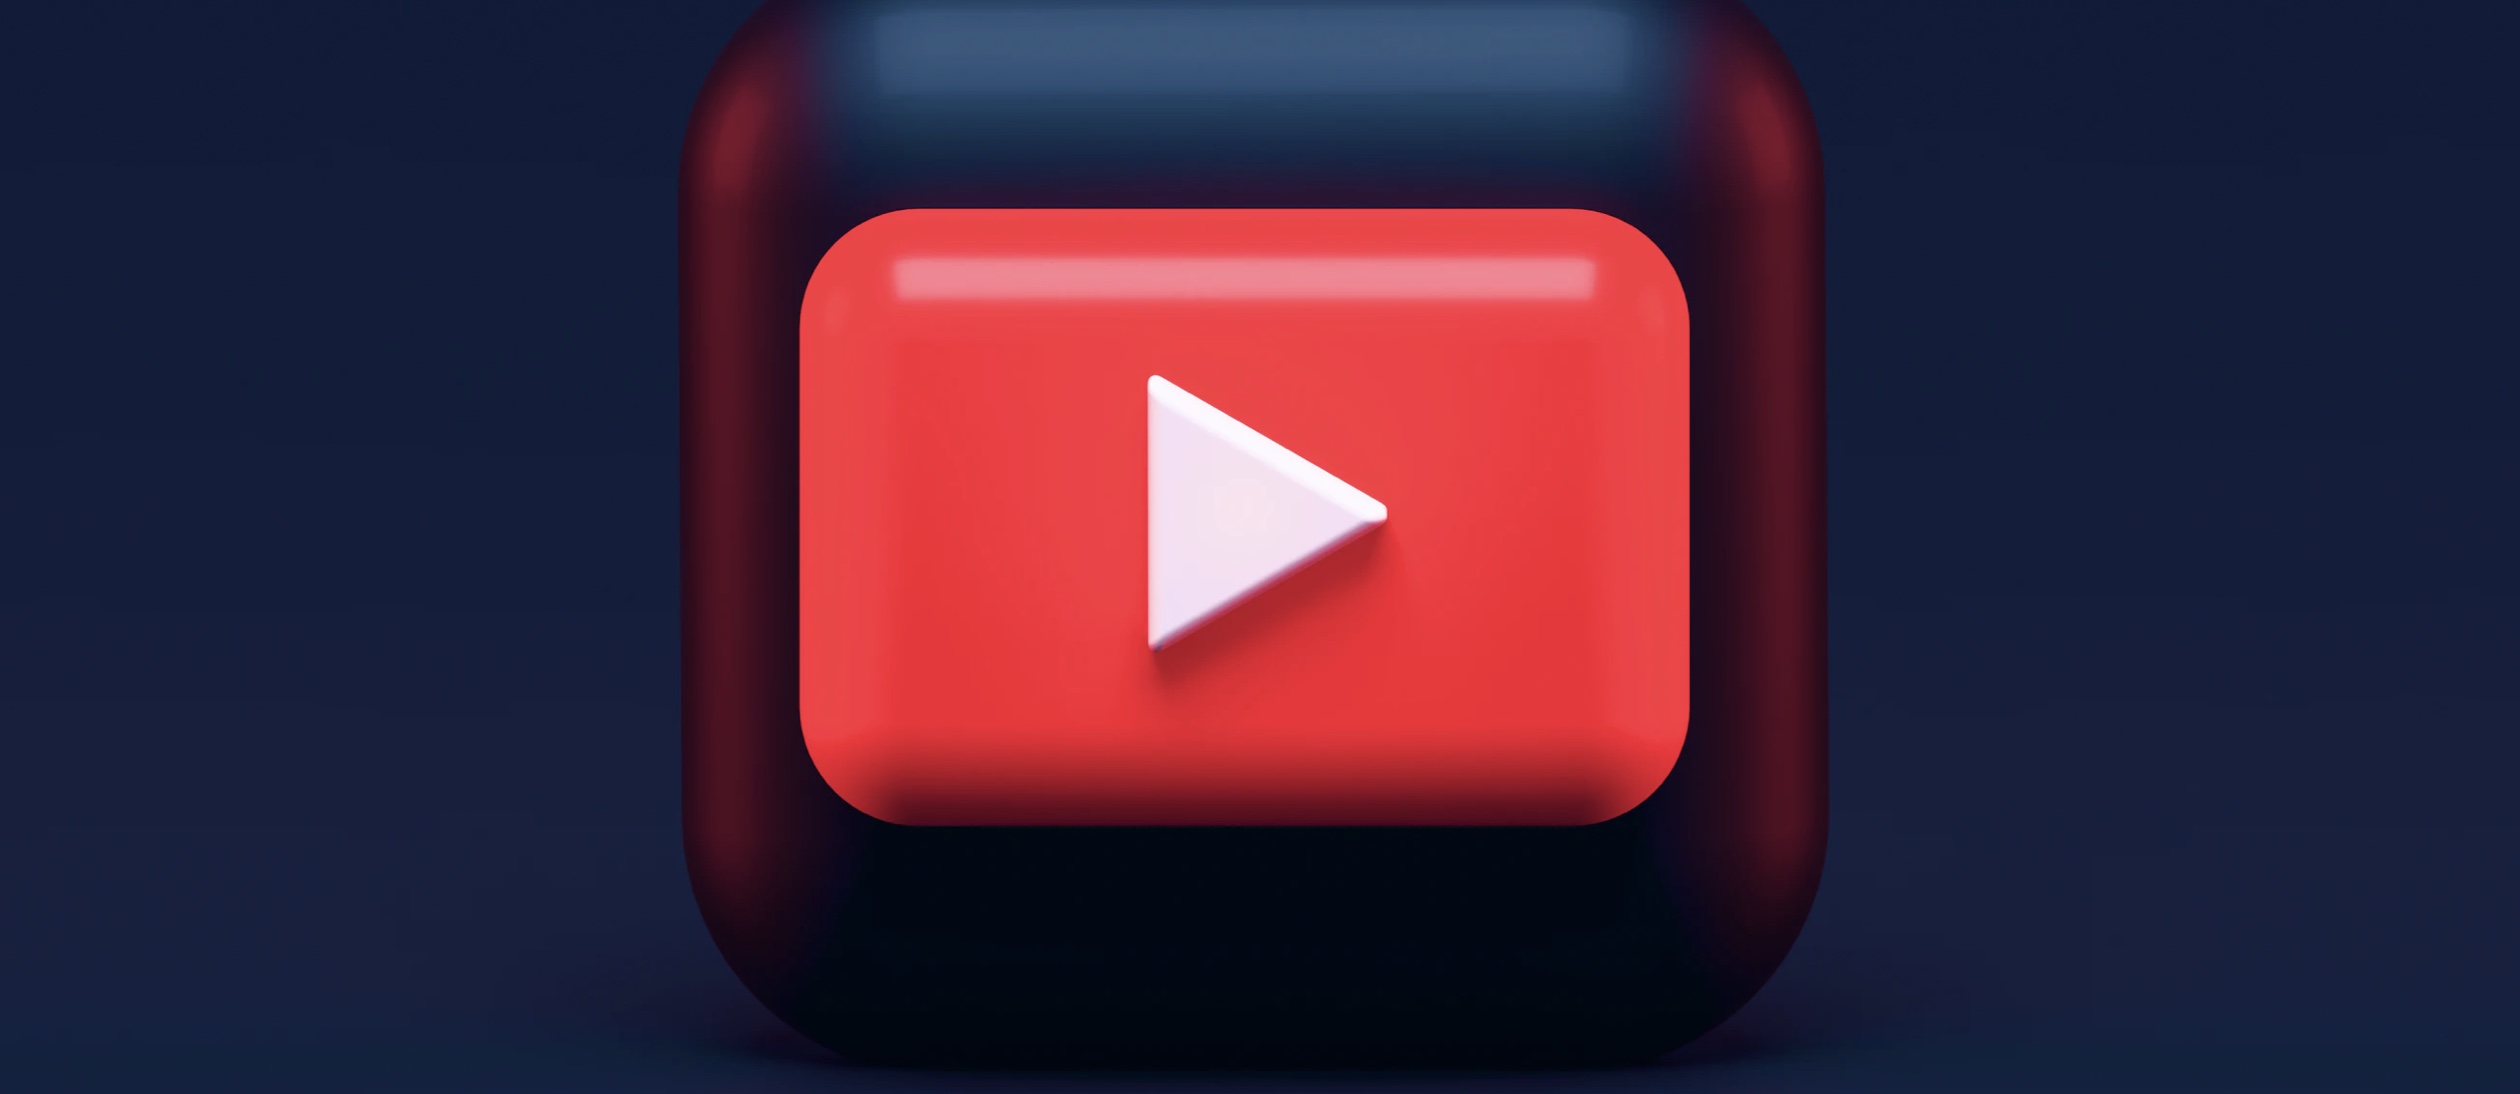 Власти озвучили сроки блокировки YouTube